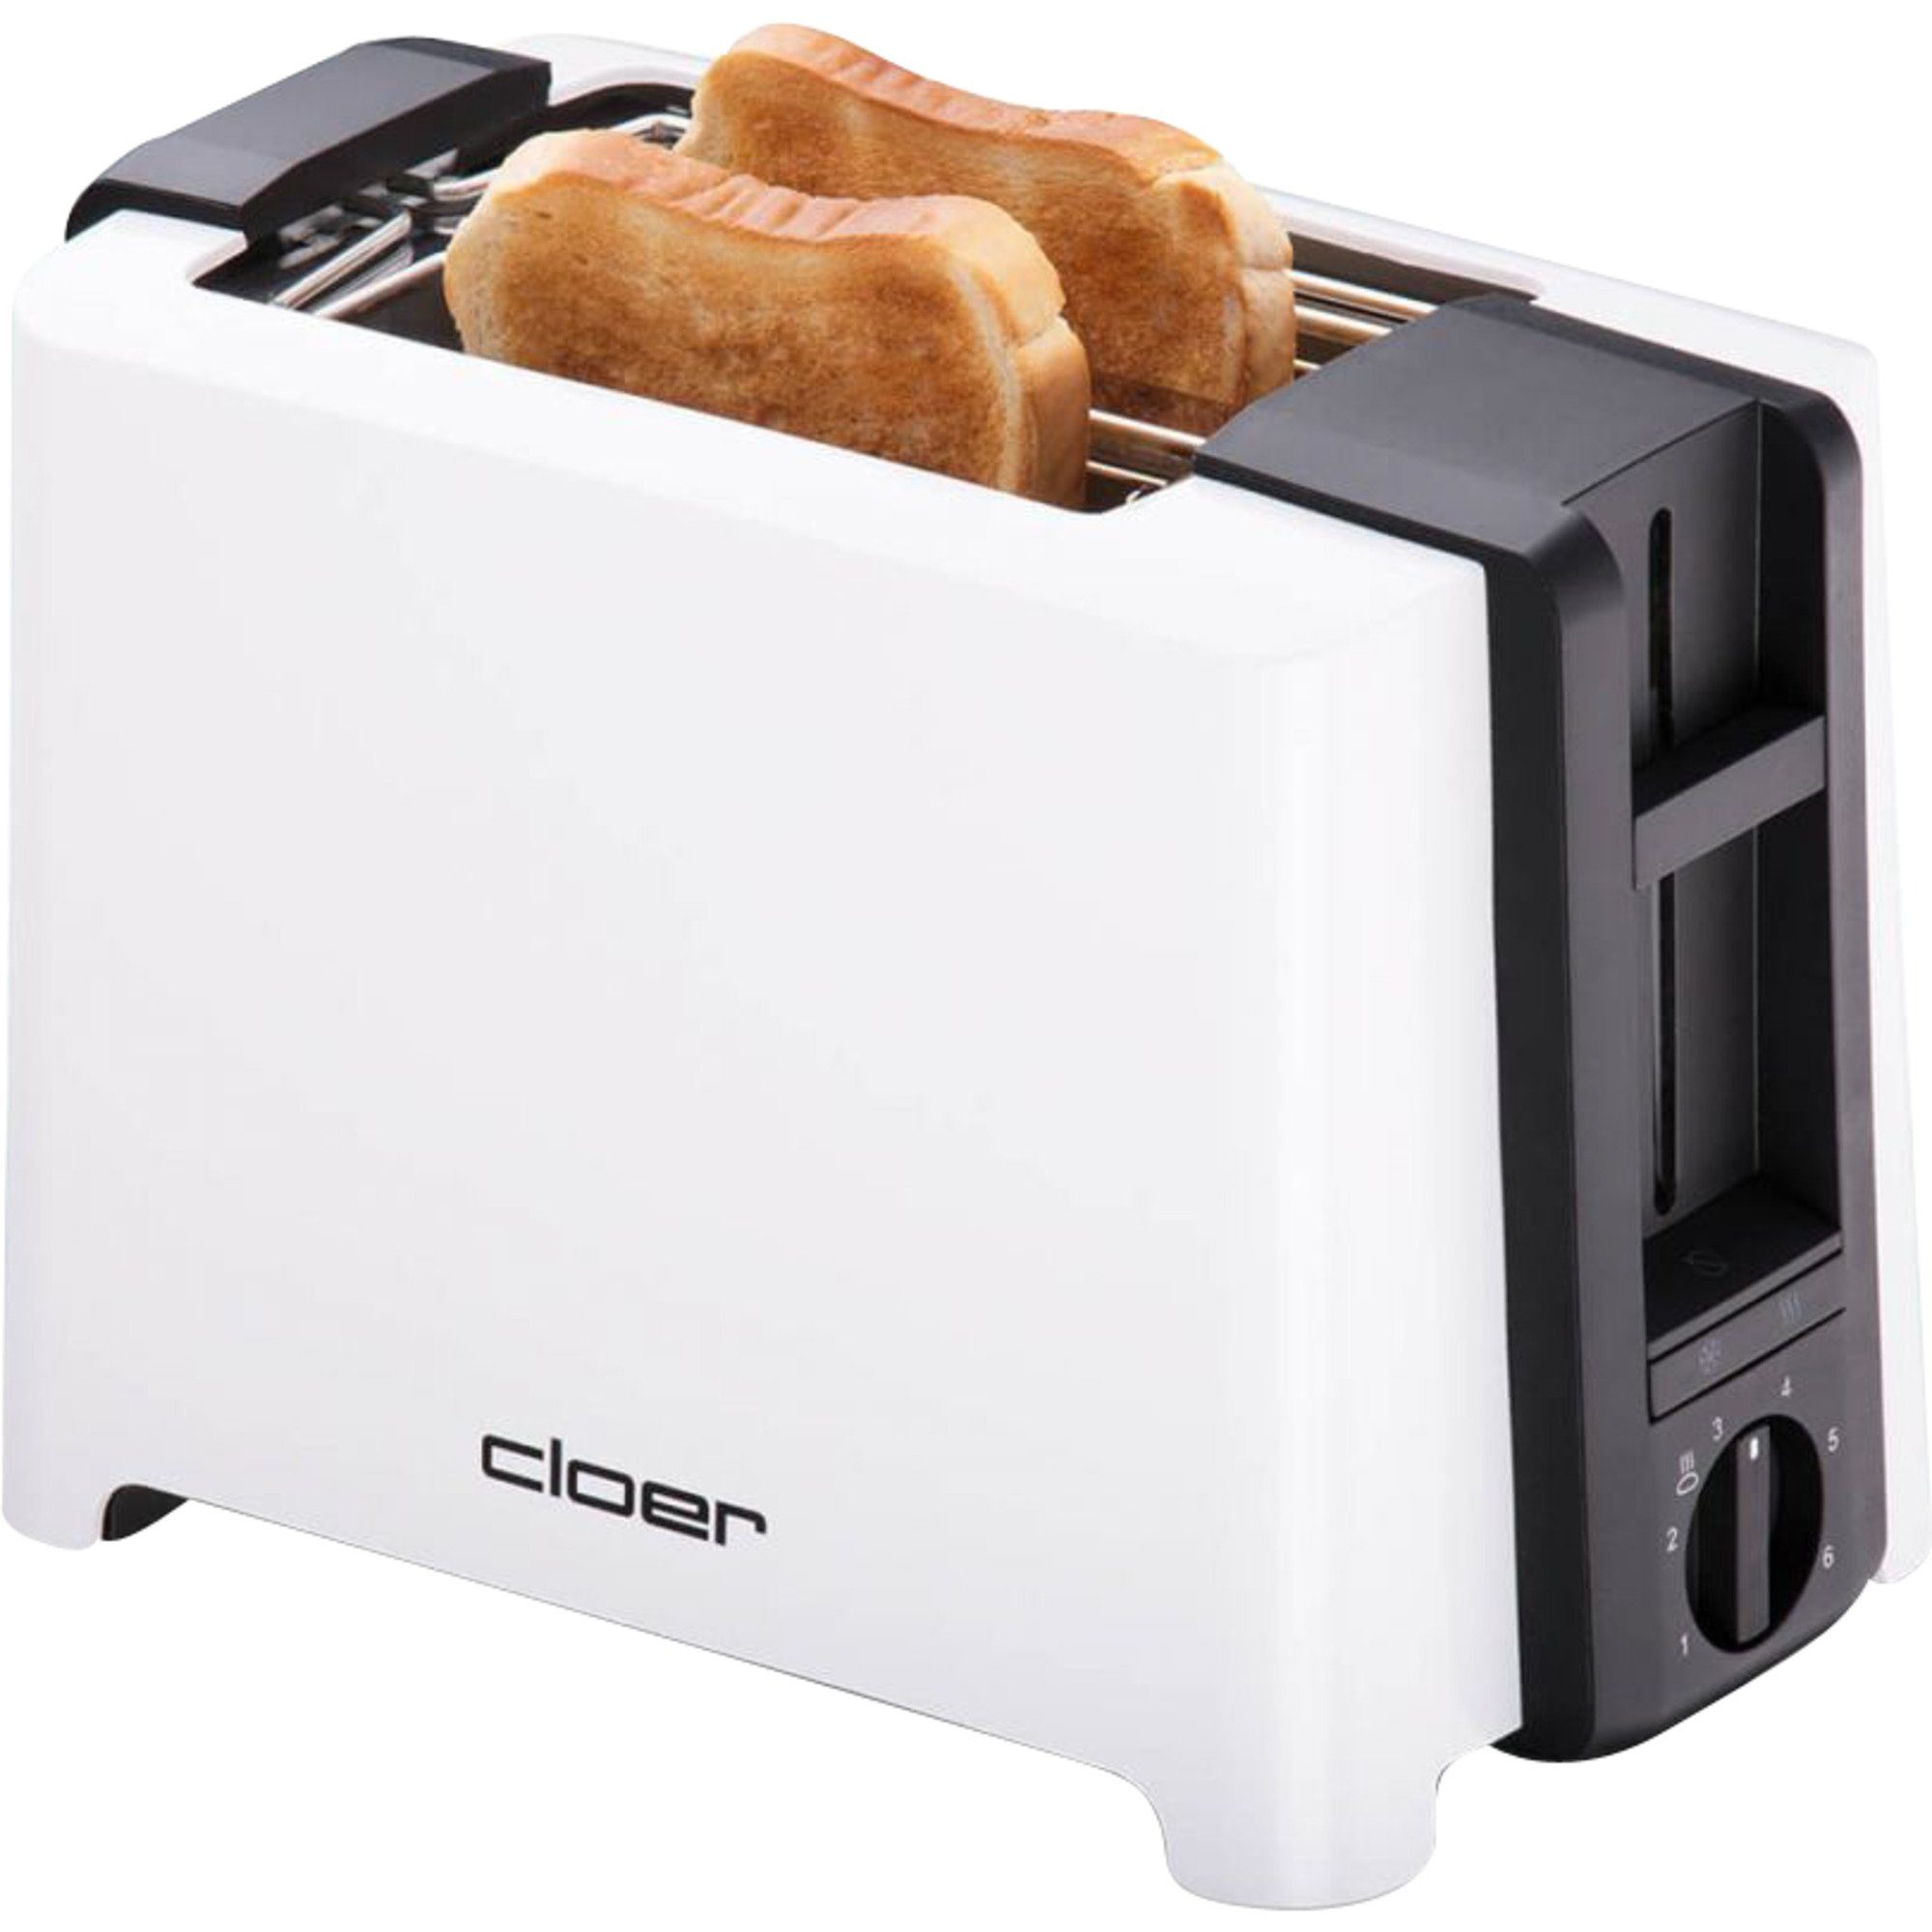 Cloer Toaster Full Size Toaster 3531